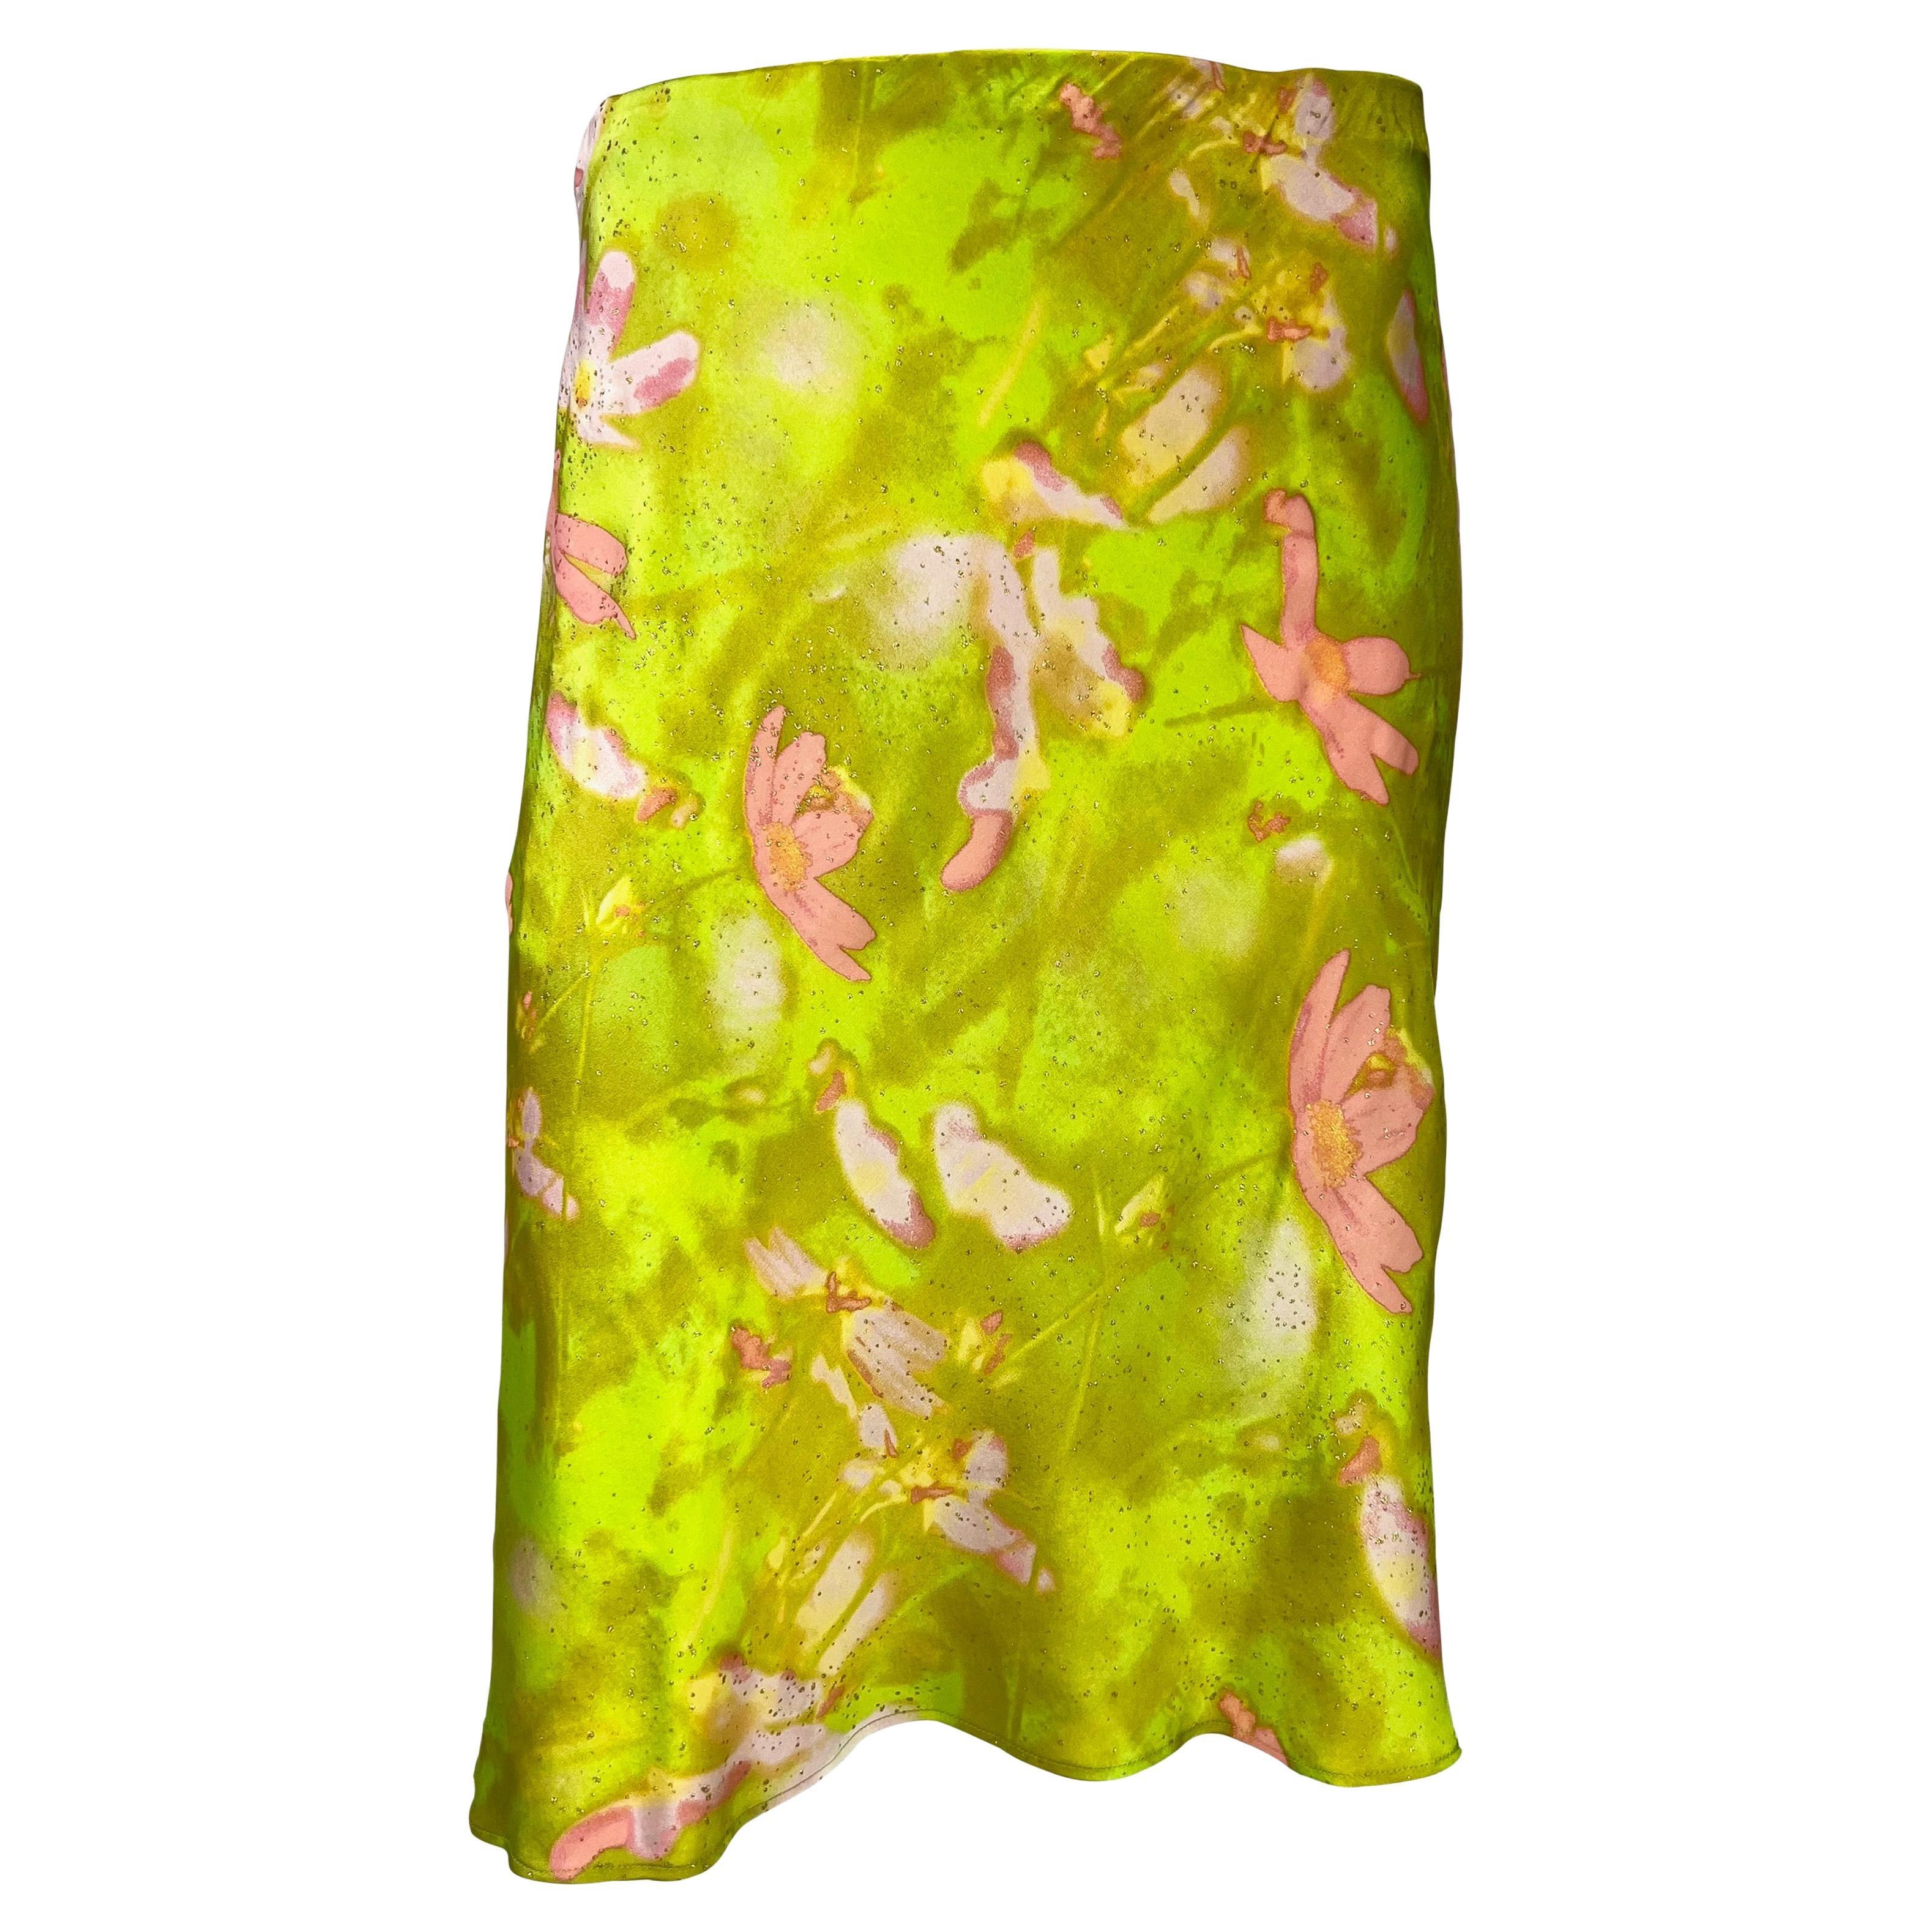 Late 1990s Roberto Cavalli Chartreuse Pink Gold Metallic Floral Satin Skirt